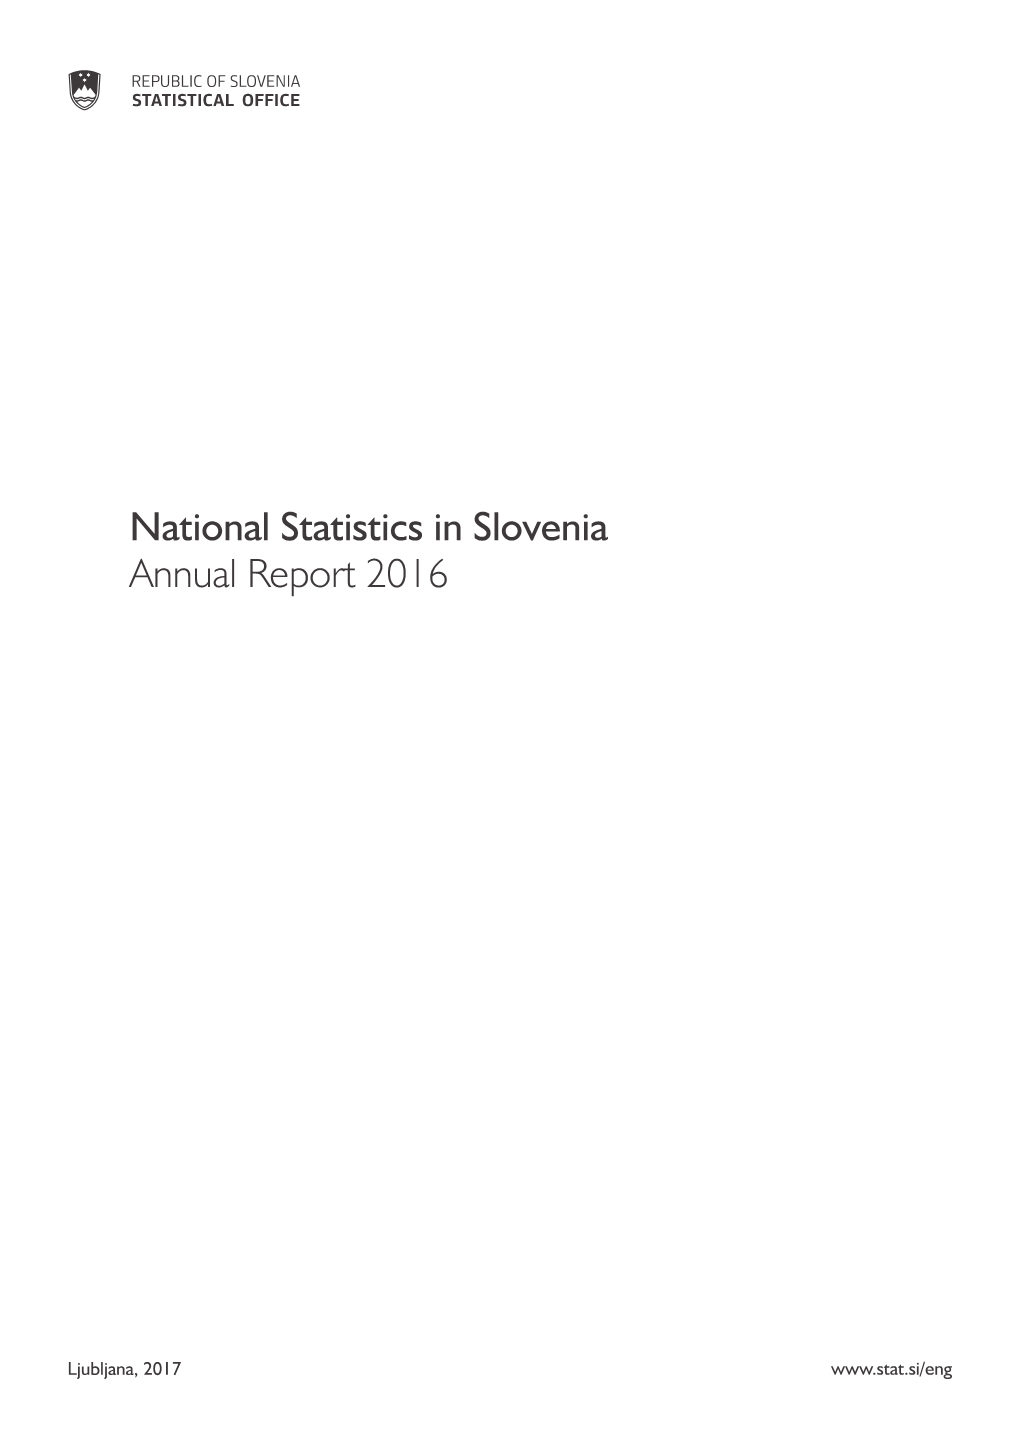 National Statistics in 2016 1